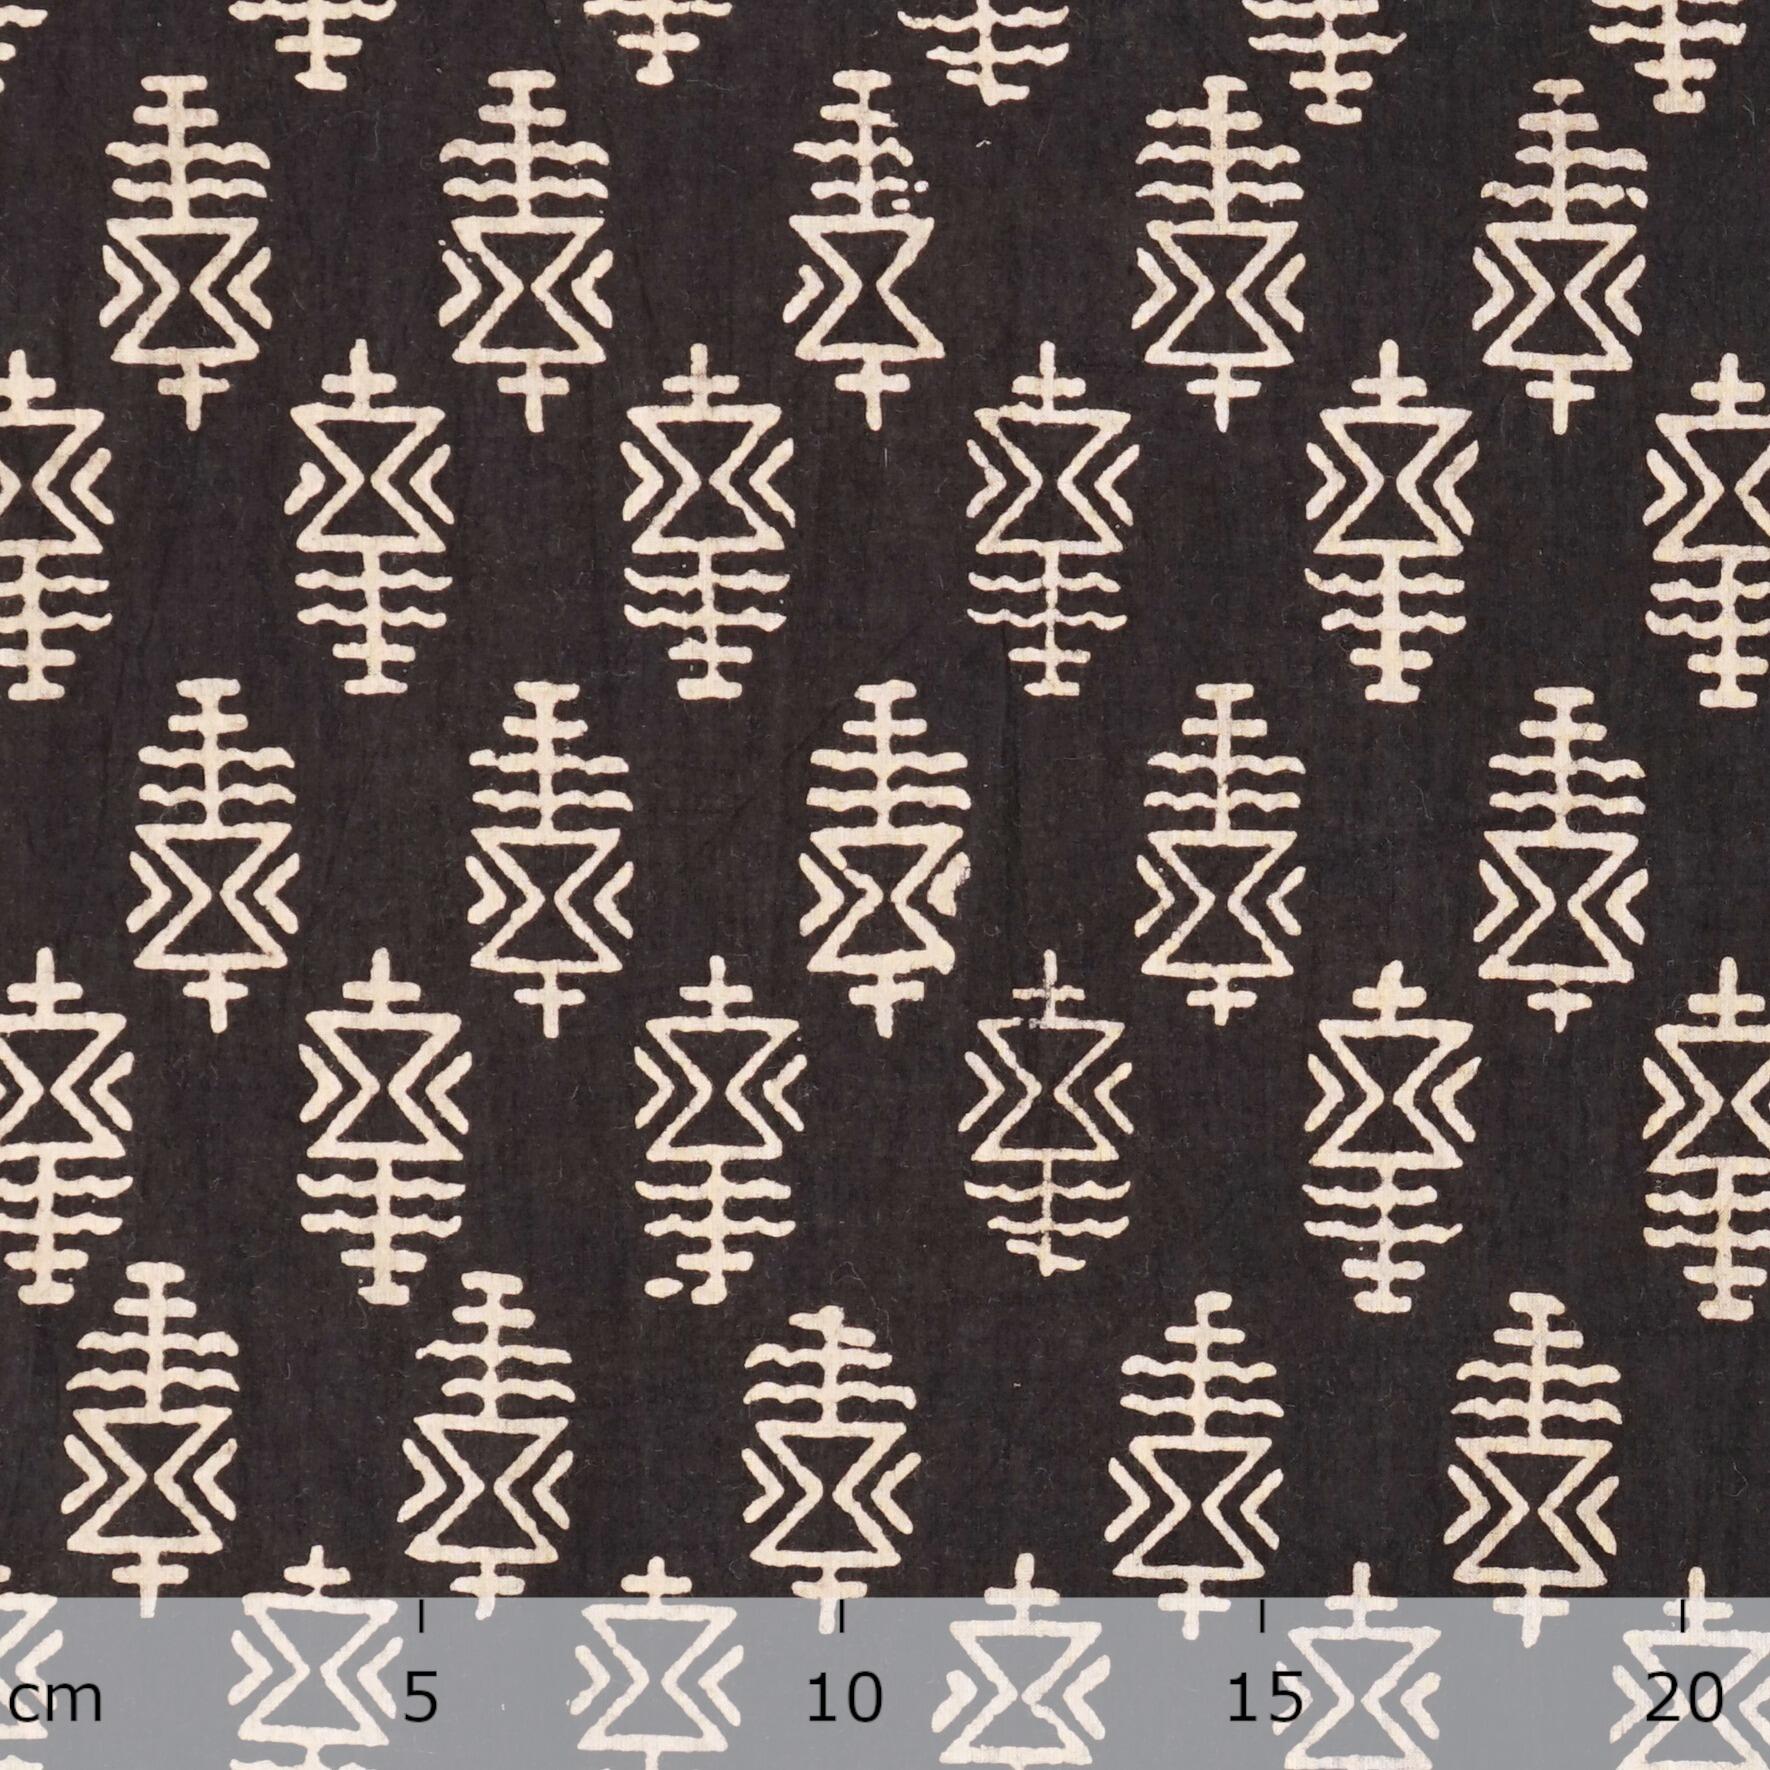 4 - AHM49 - Block-Printed Cotton - Hieroglyphic Print - Black Dye - Ruler